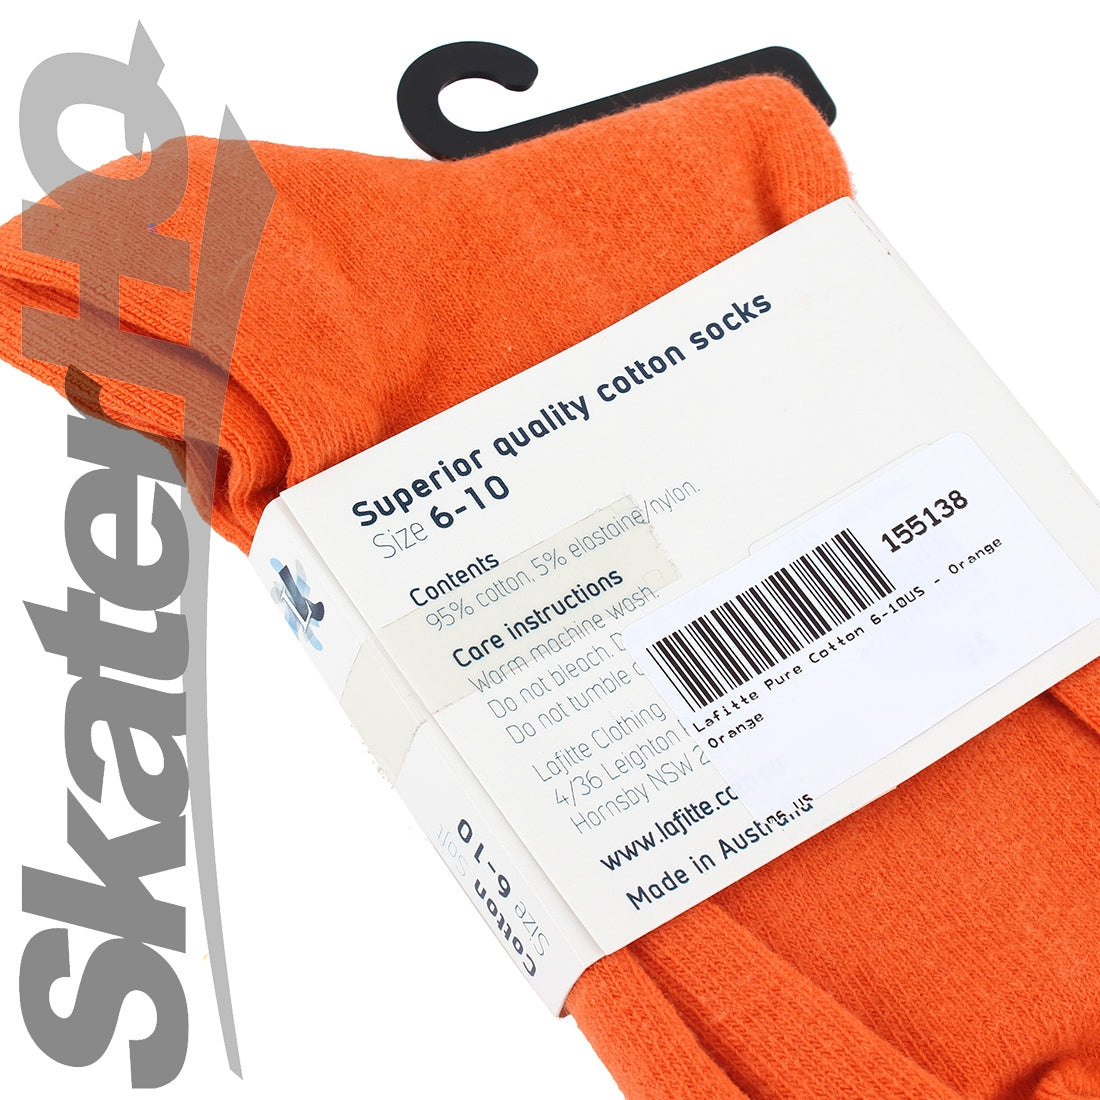 Lafitte Cotton Crew Socks - Orange - 6-10US Apparel Socks